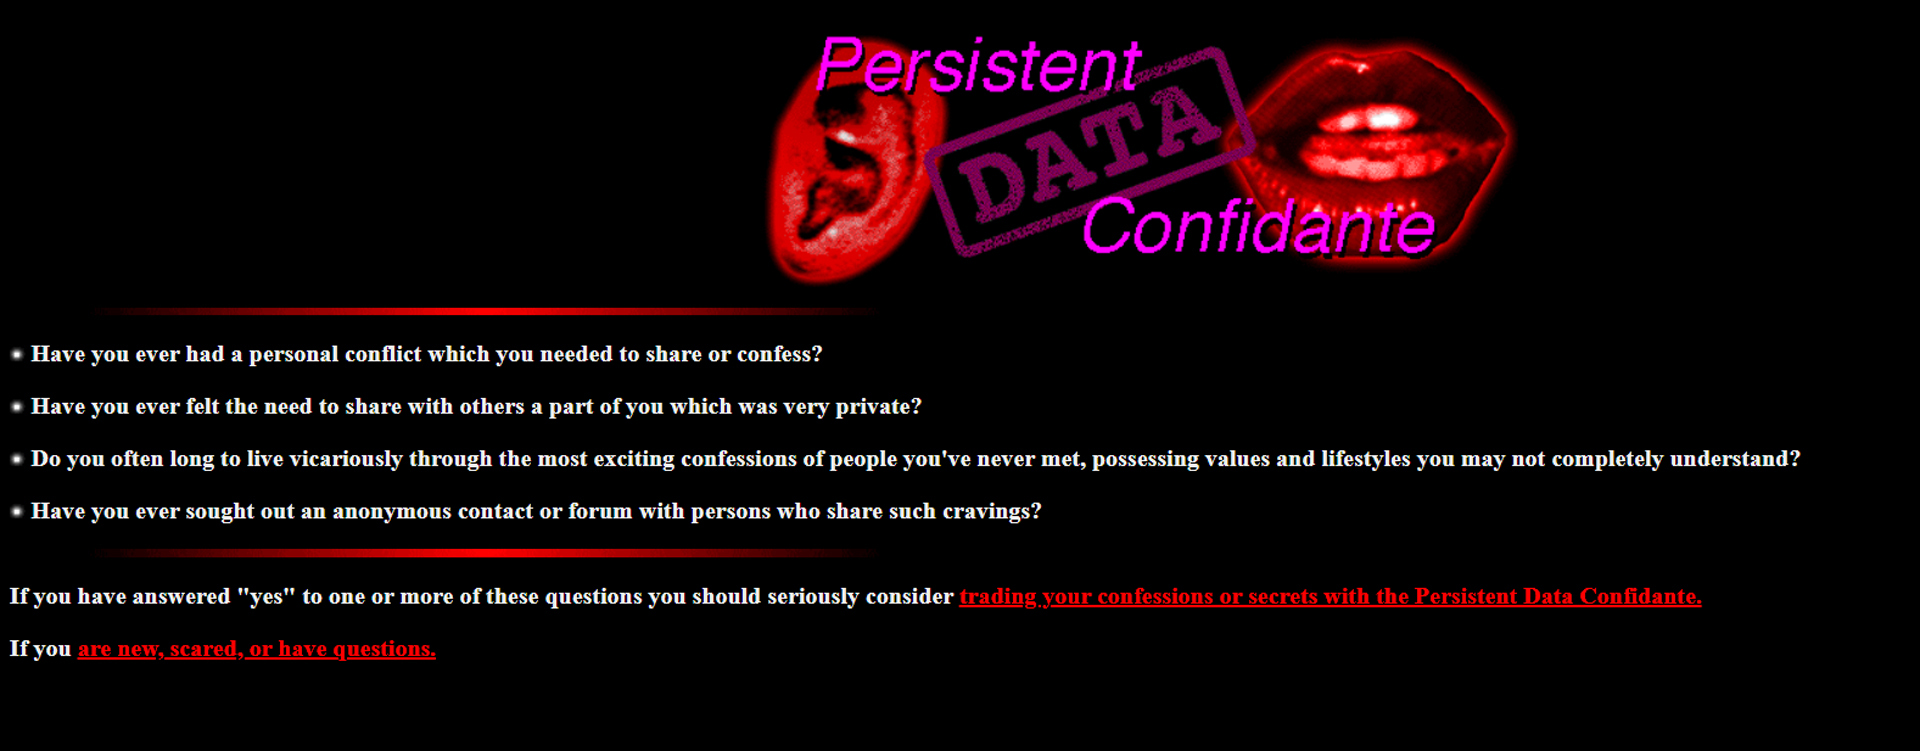 ©, Paul Vanouse, Lisa Hutton, and Eric Nyberg, The Persistent Data Confidante